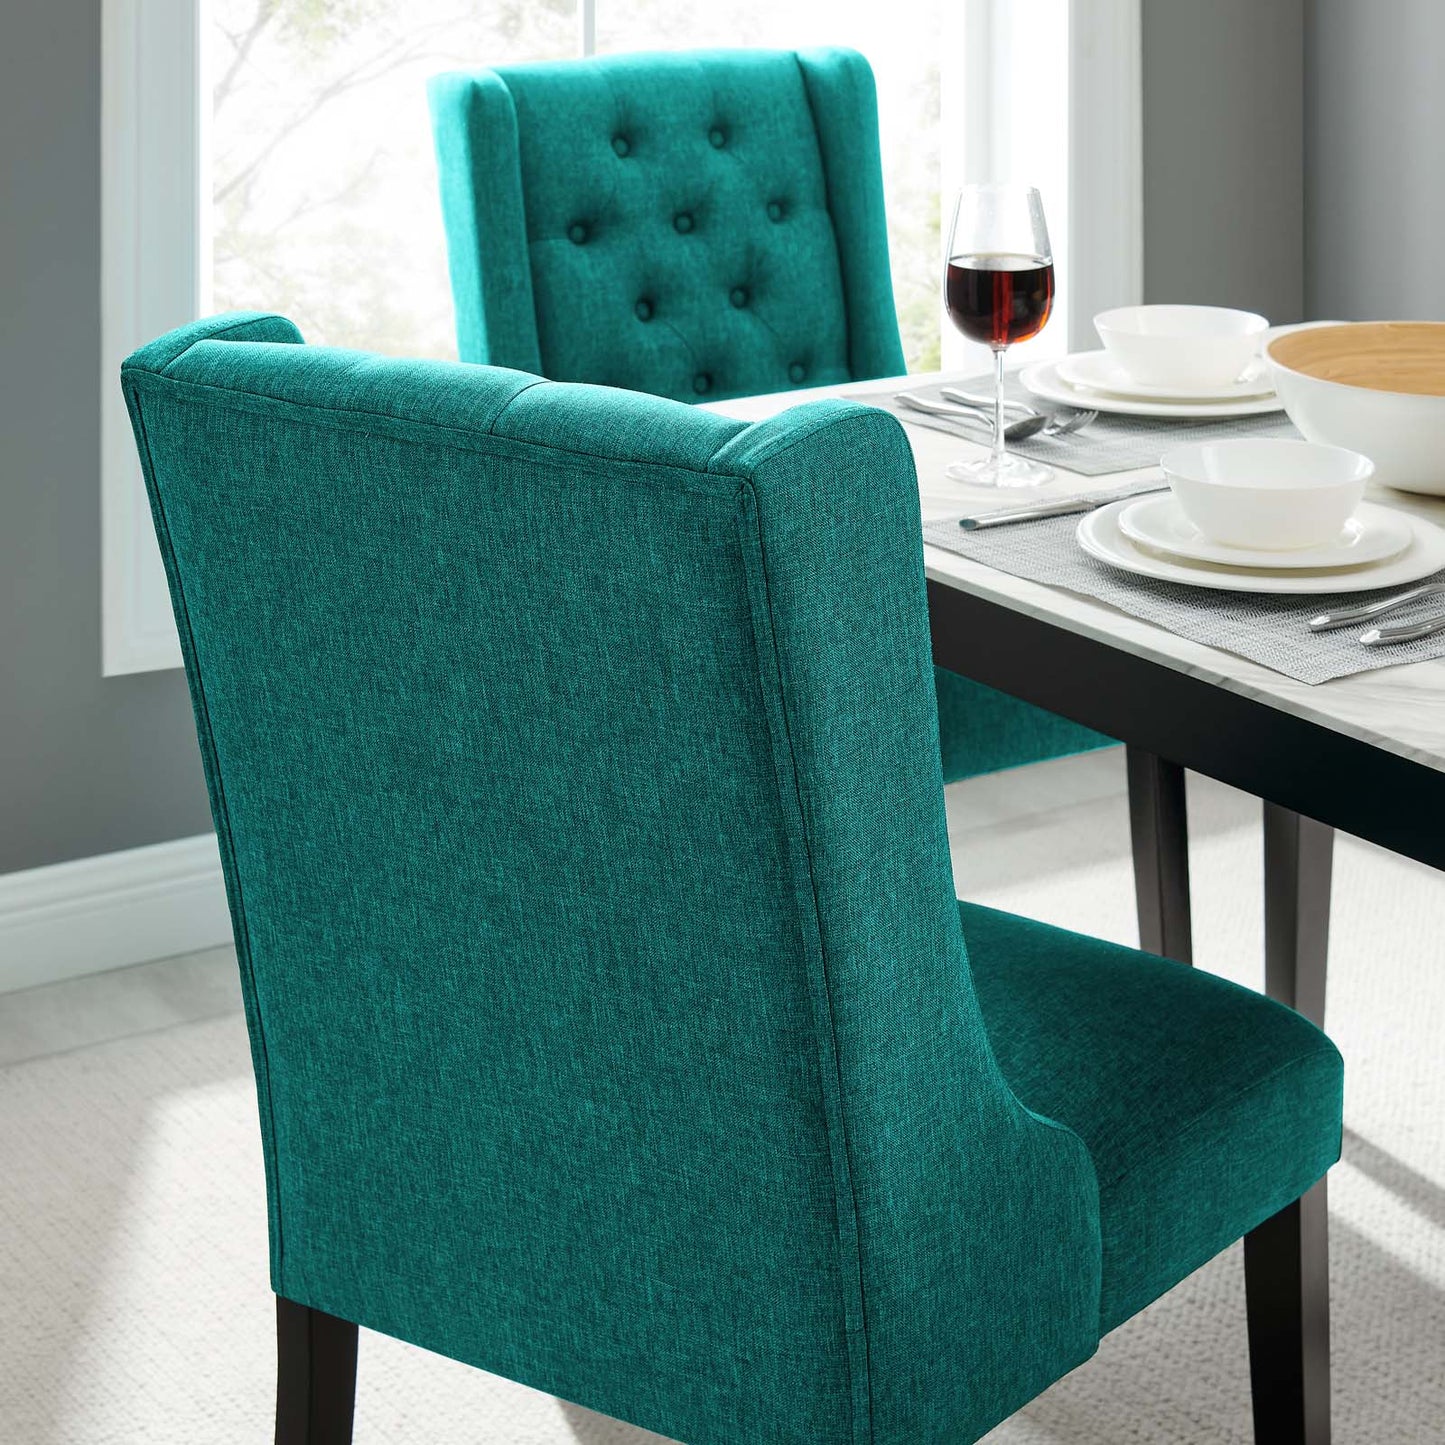 Baronet Button Tufted Fabric Dining Chair Teal EEI-2235-TEA